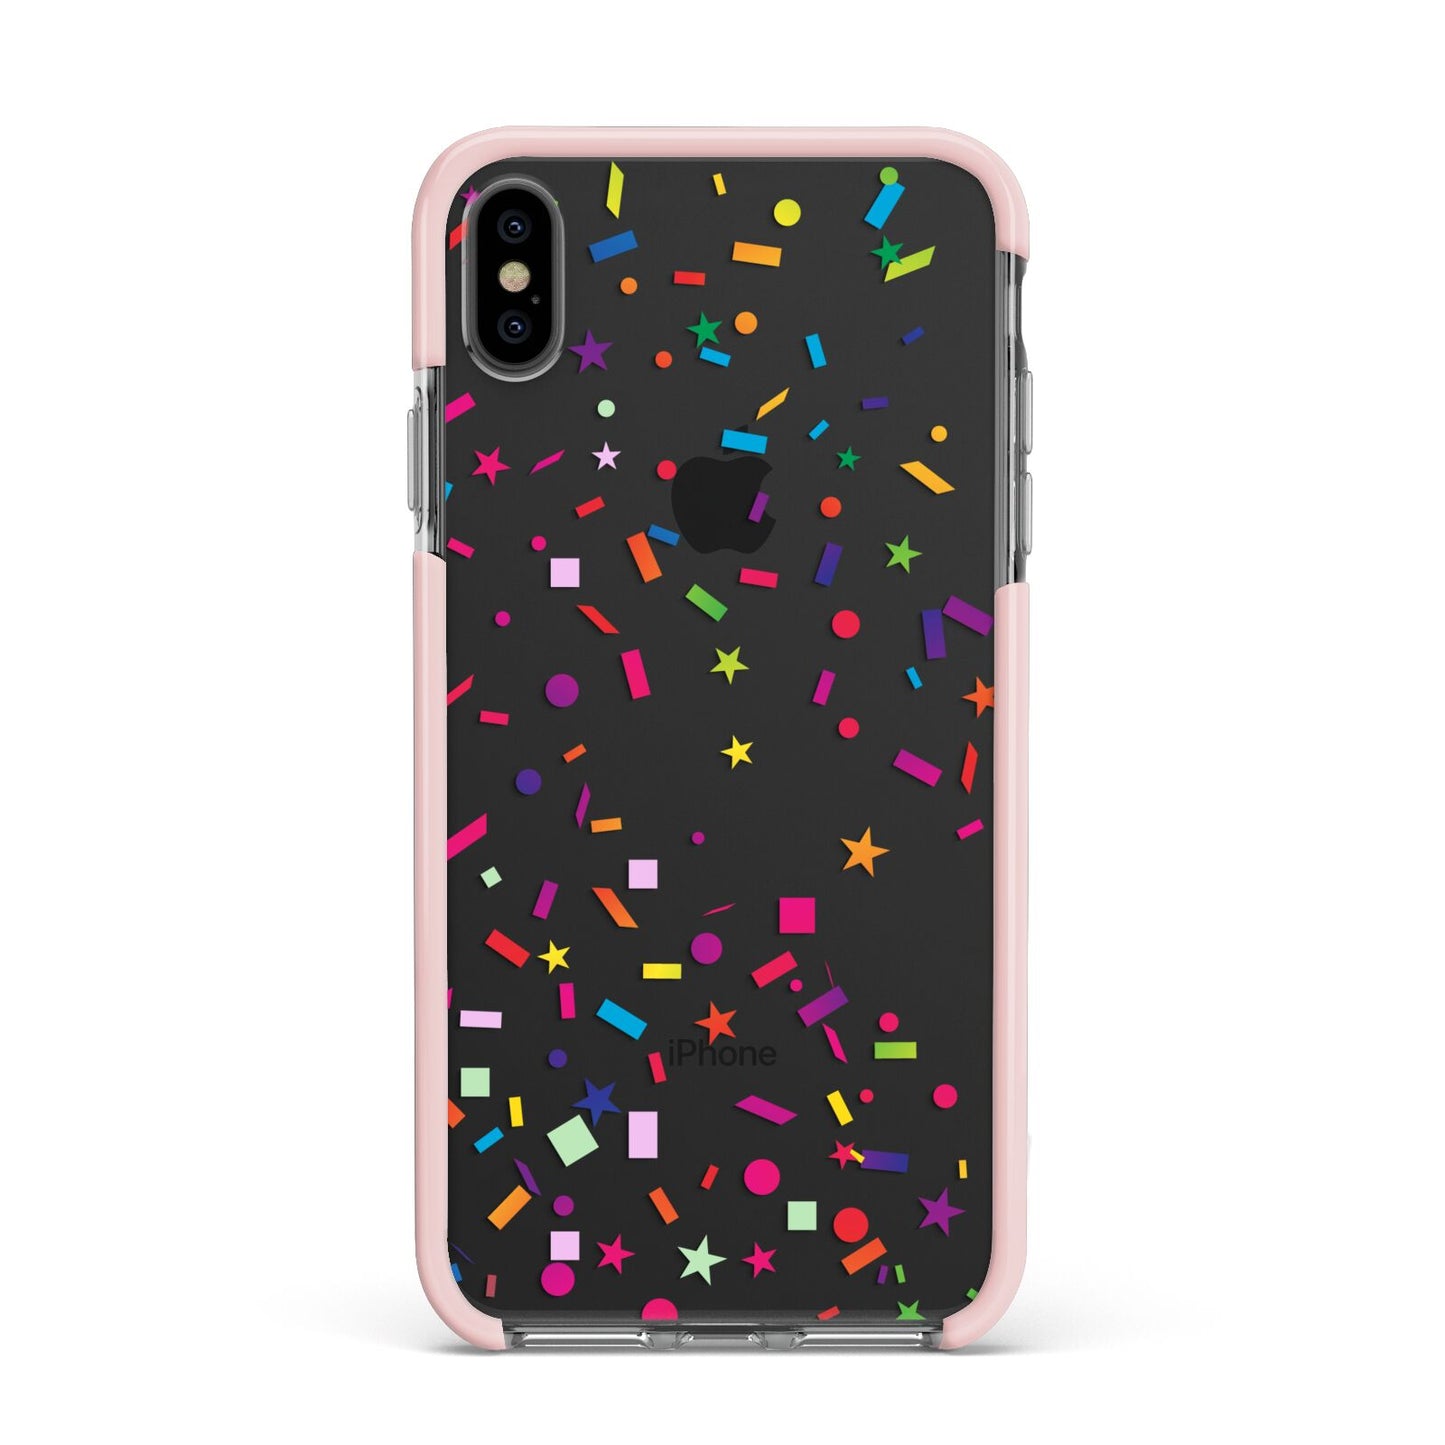 Confetti Apple iPhone Xs Max Impact Case Pink Edge on Black Phone